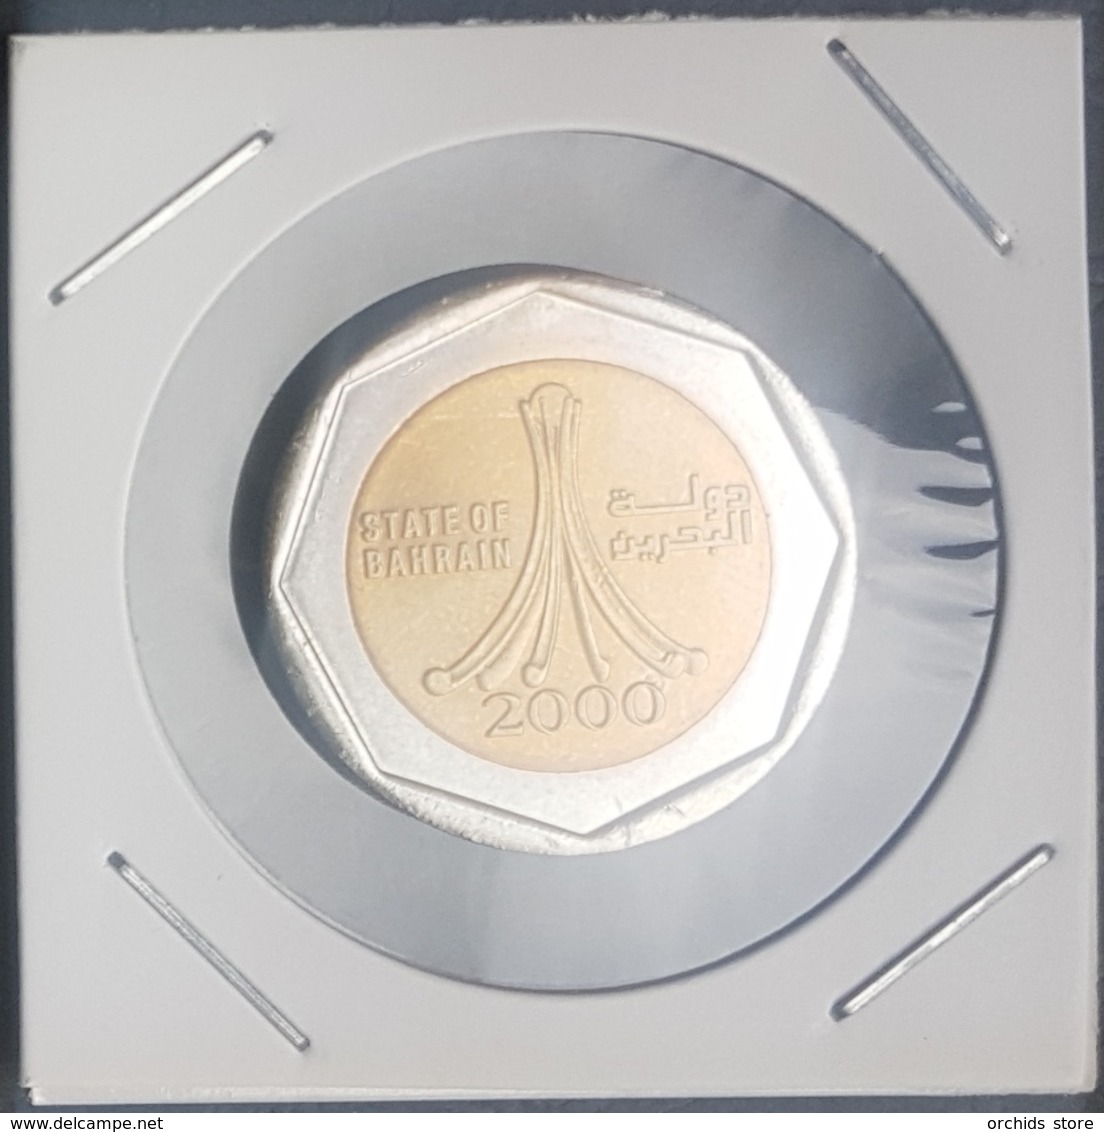 HX - Bahrain 2000 500 Fils Bimettalic Coin KM #22 - State Coat Of Arms - A-UNC / UNC - Bahreïn